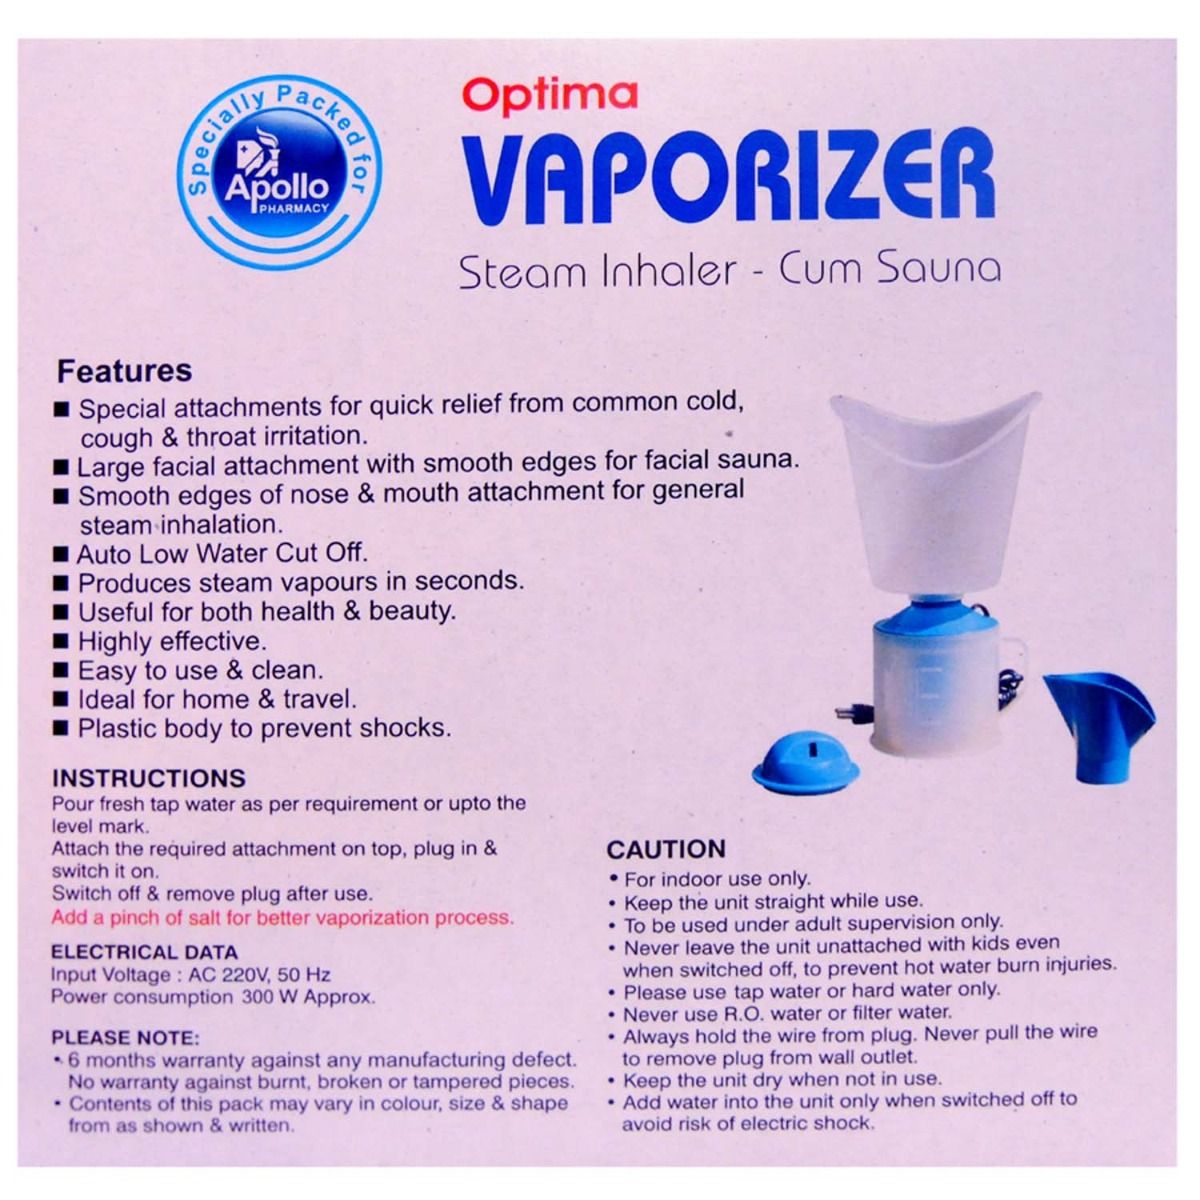 Apollo Pharmacy Optima Vaporizer Steam Inhaler, 1 Count, Pack of 1 